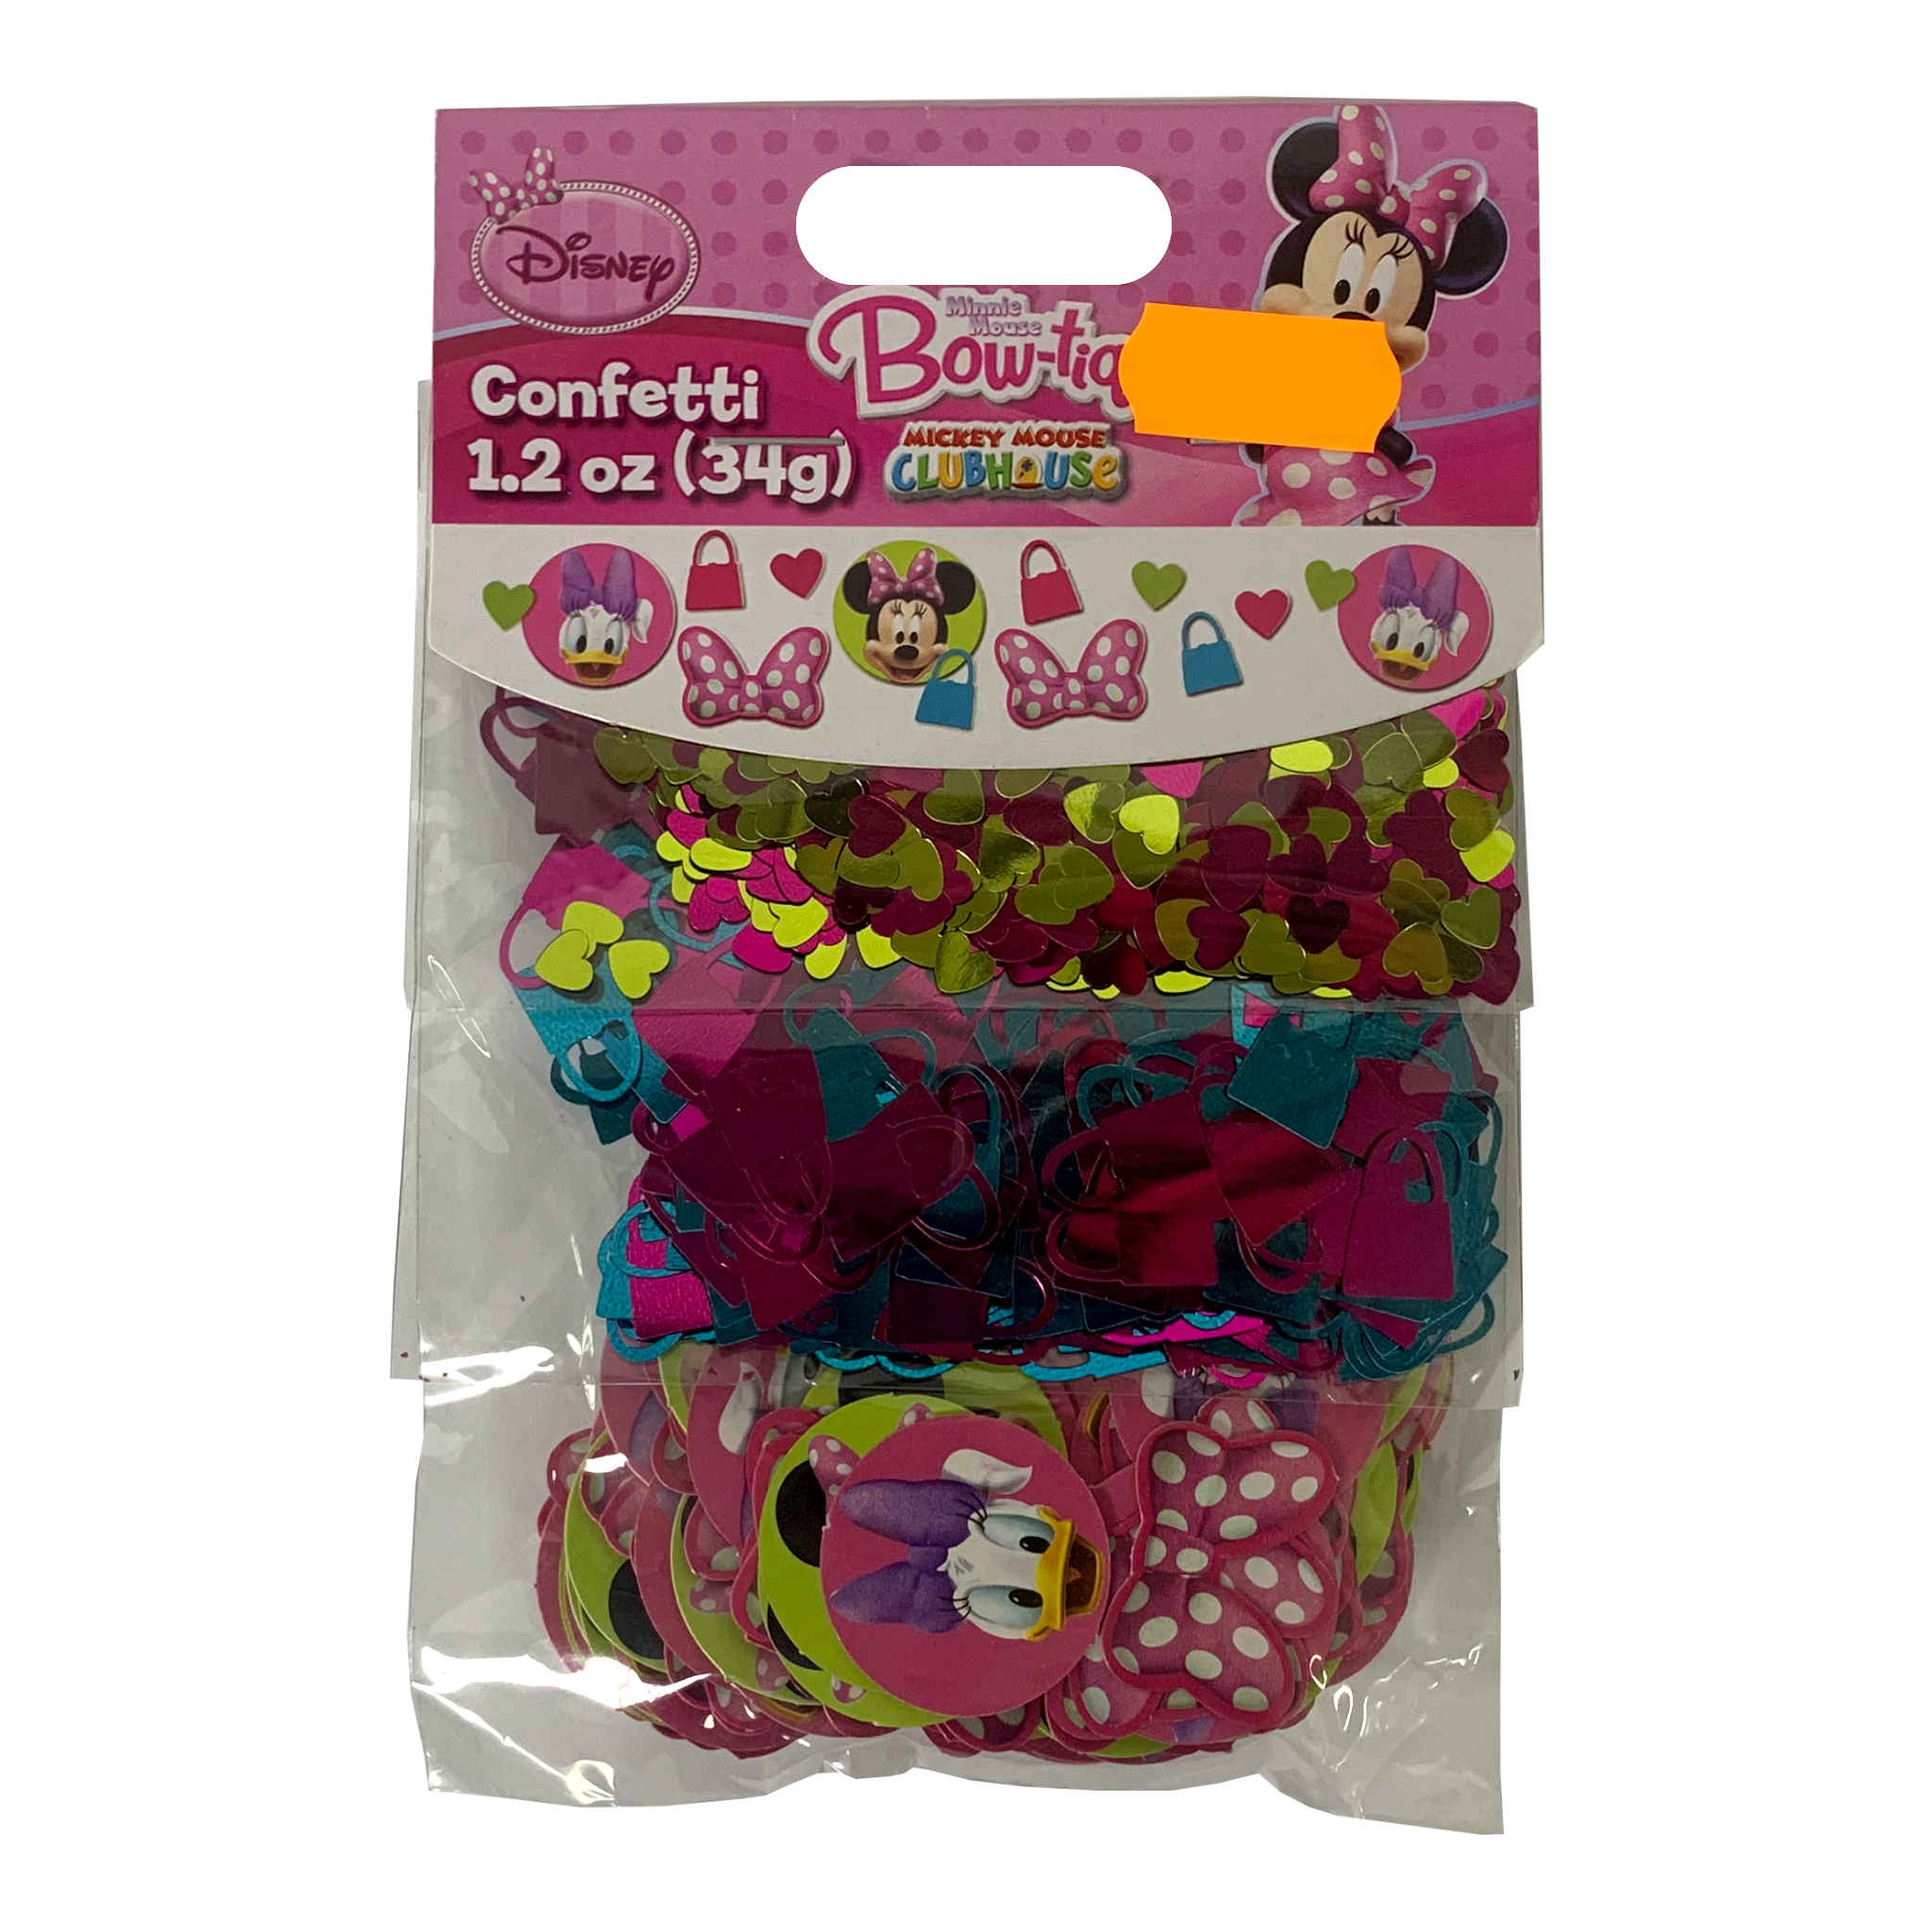 Disney Minnie Mouse Bow-tique Confetti